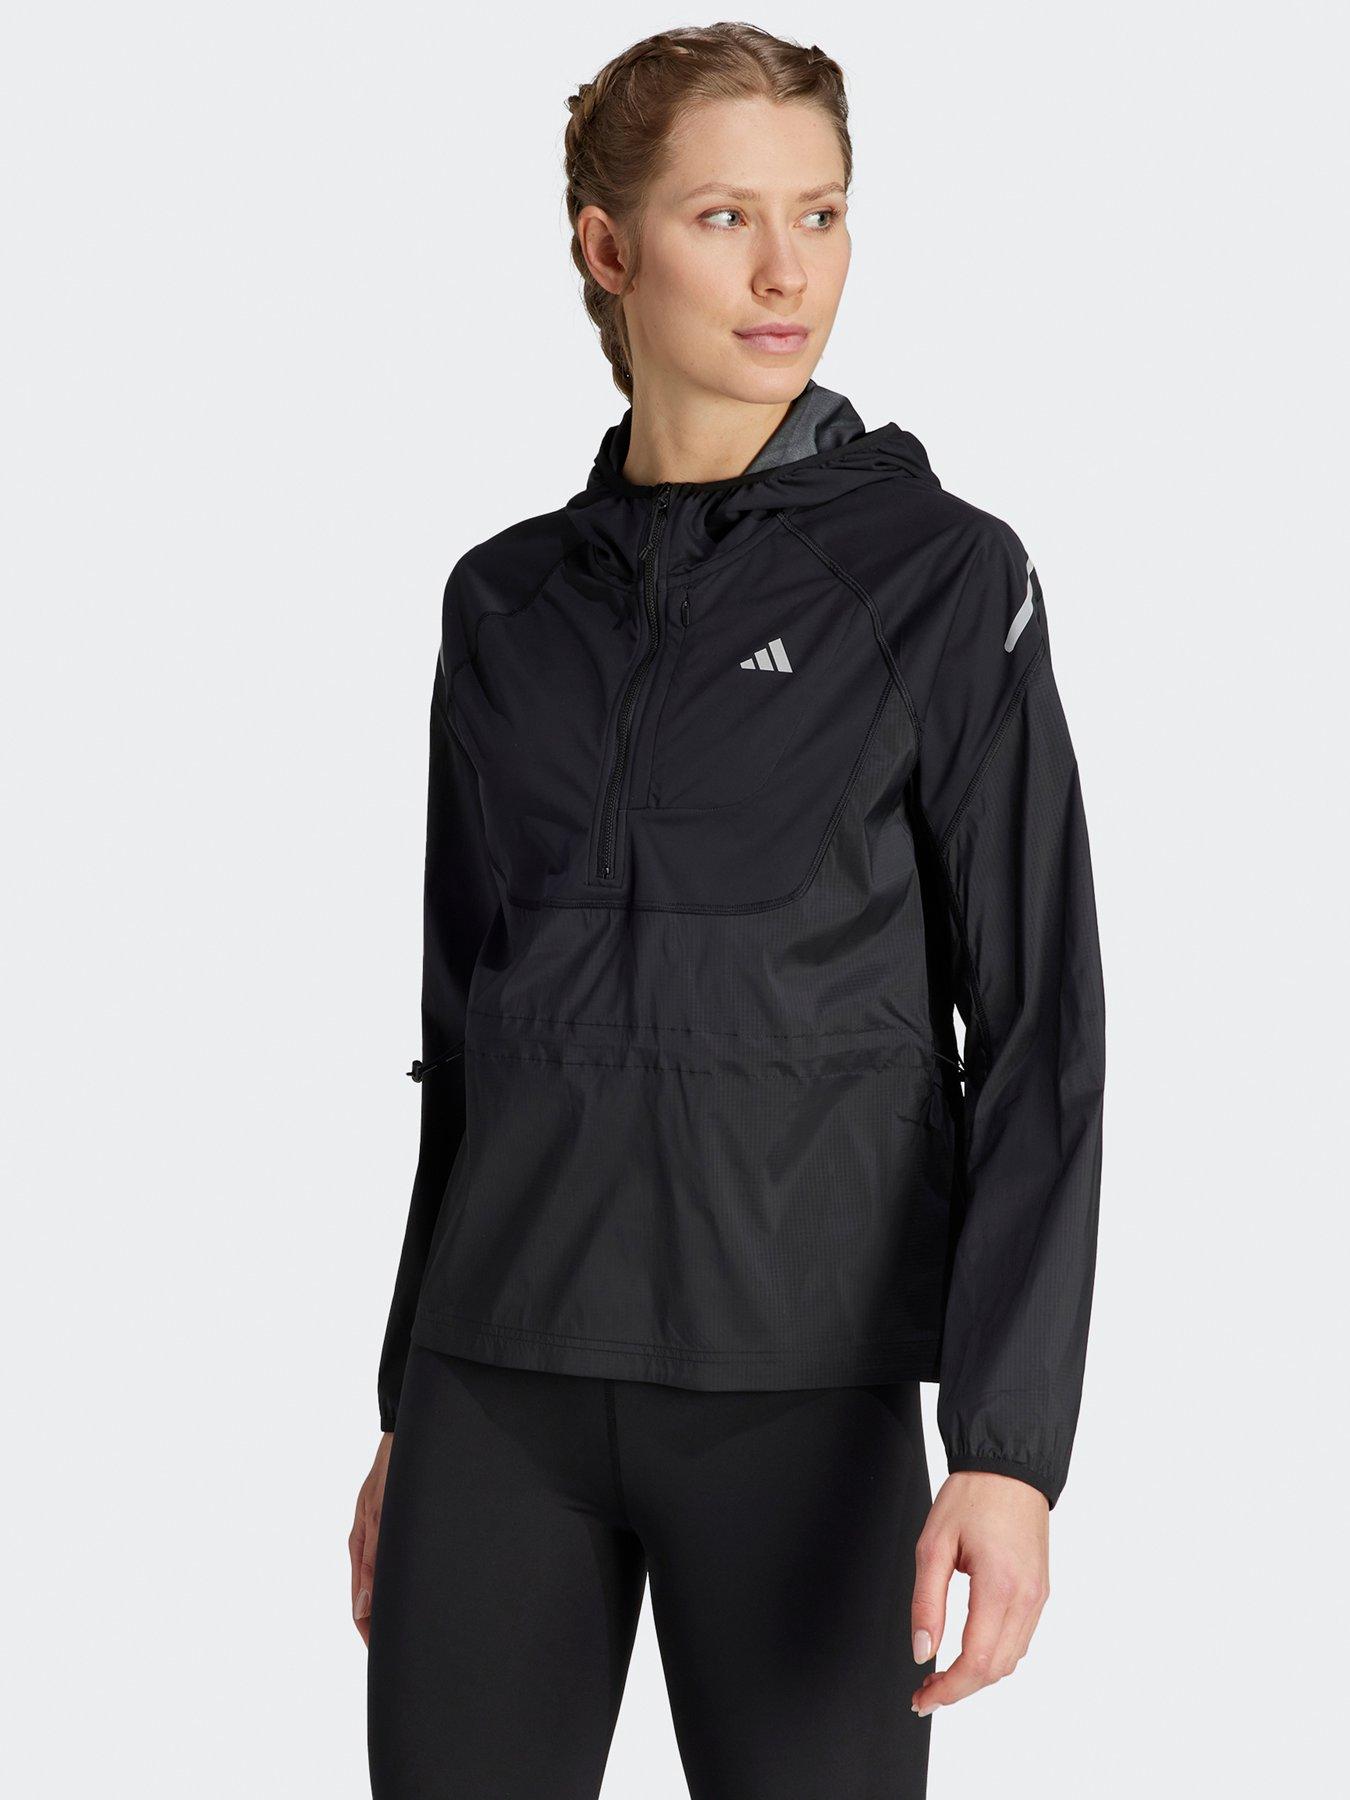 adidas Women's Ultimate Run Jacket - Black, Black, Size M, Women